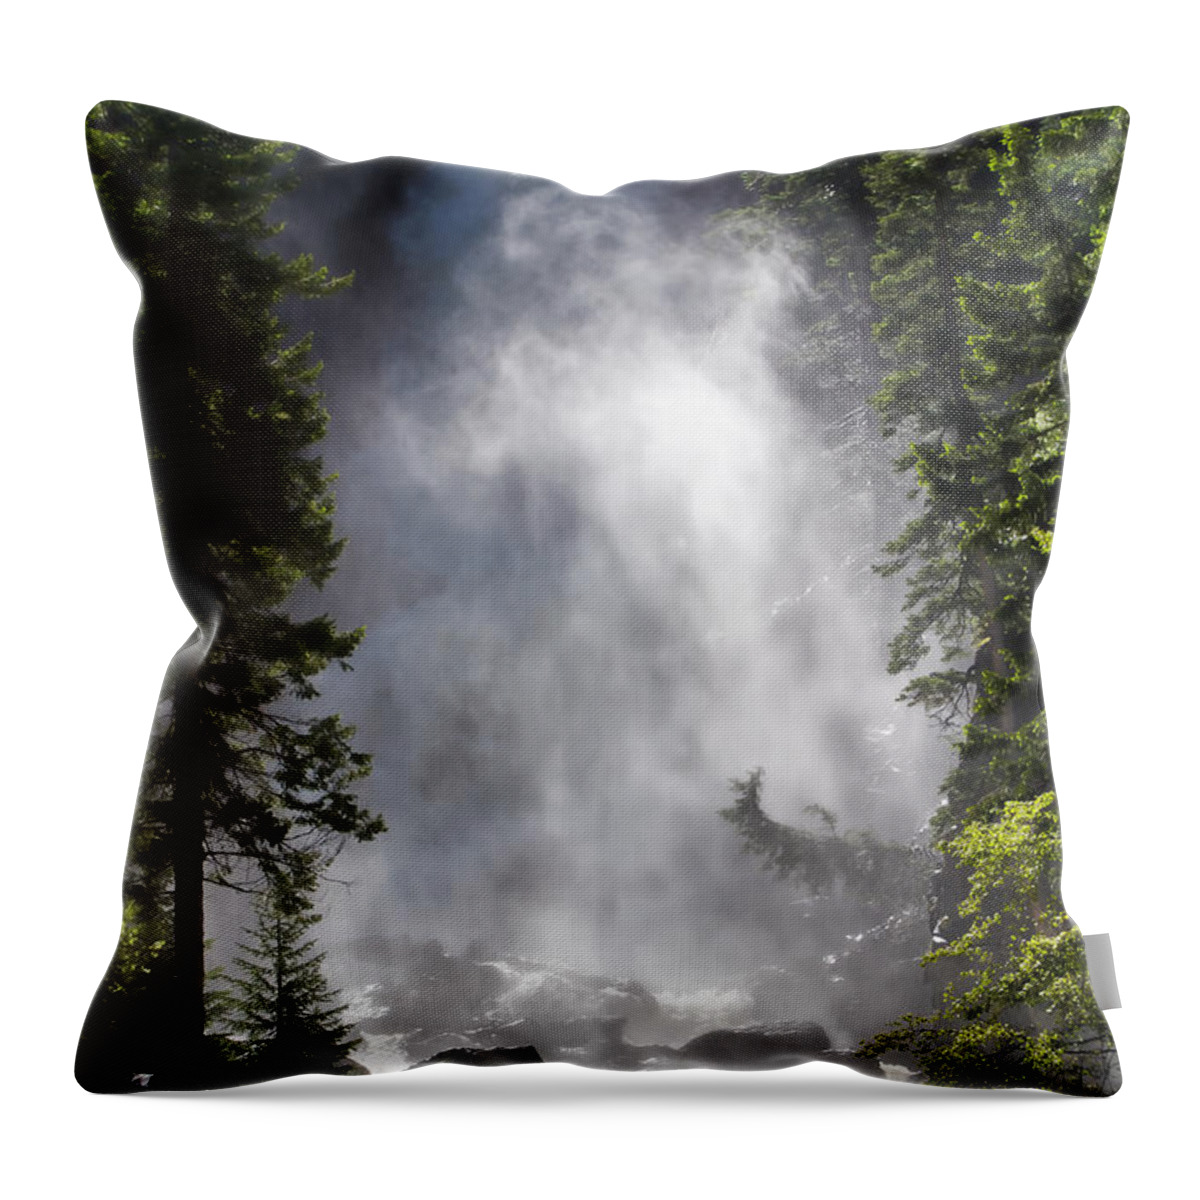 Falls Throw Pillow featuring the photograph Fish Creek Falls by Don Schwartz